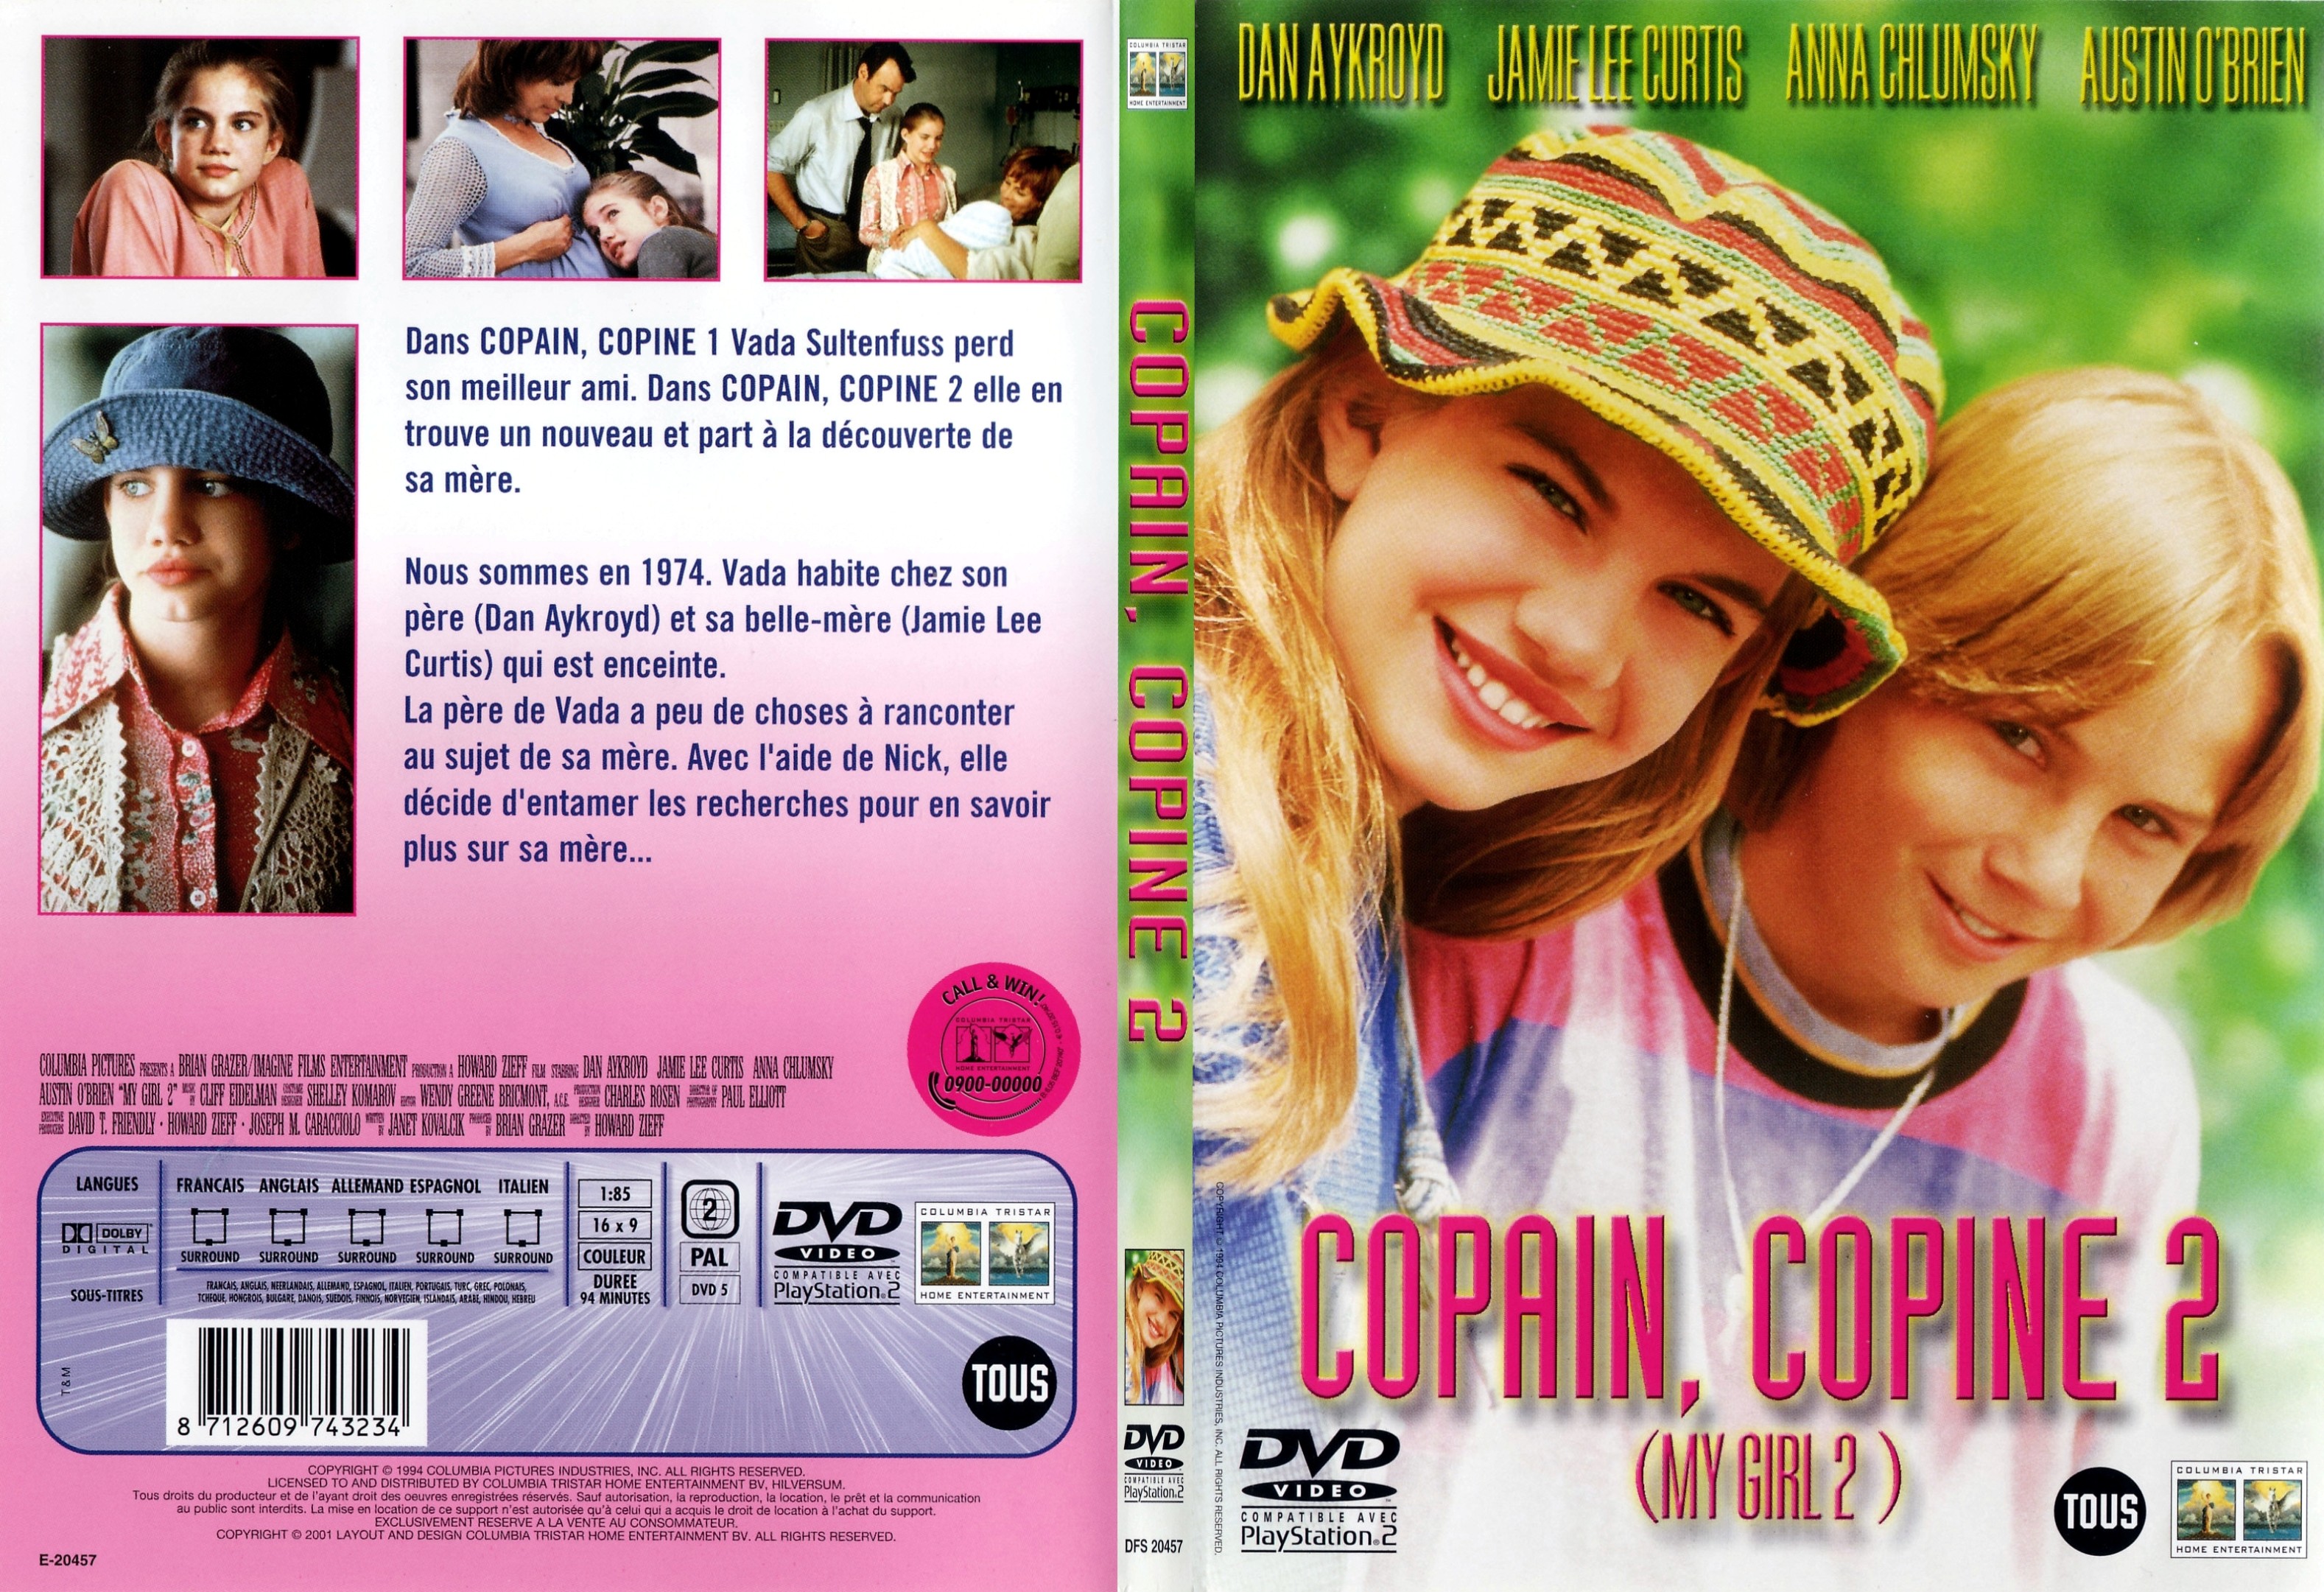 Jaquette DVD Copain copine 2  SLIM